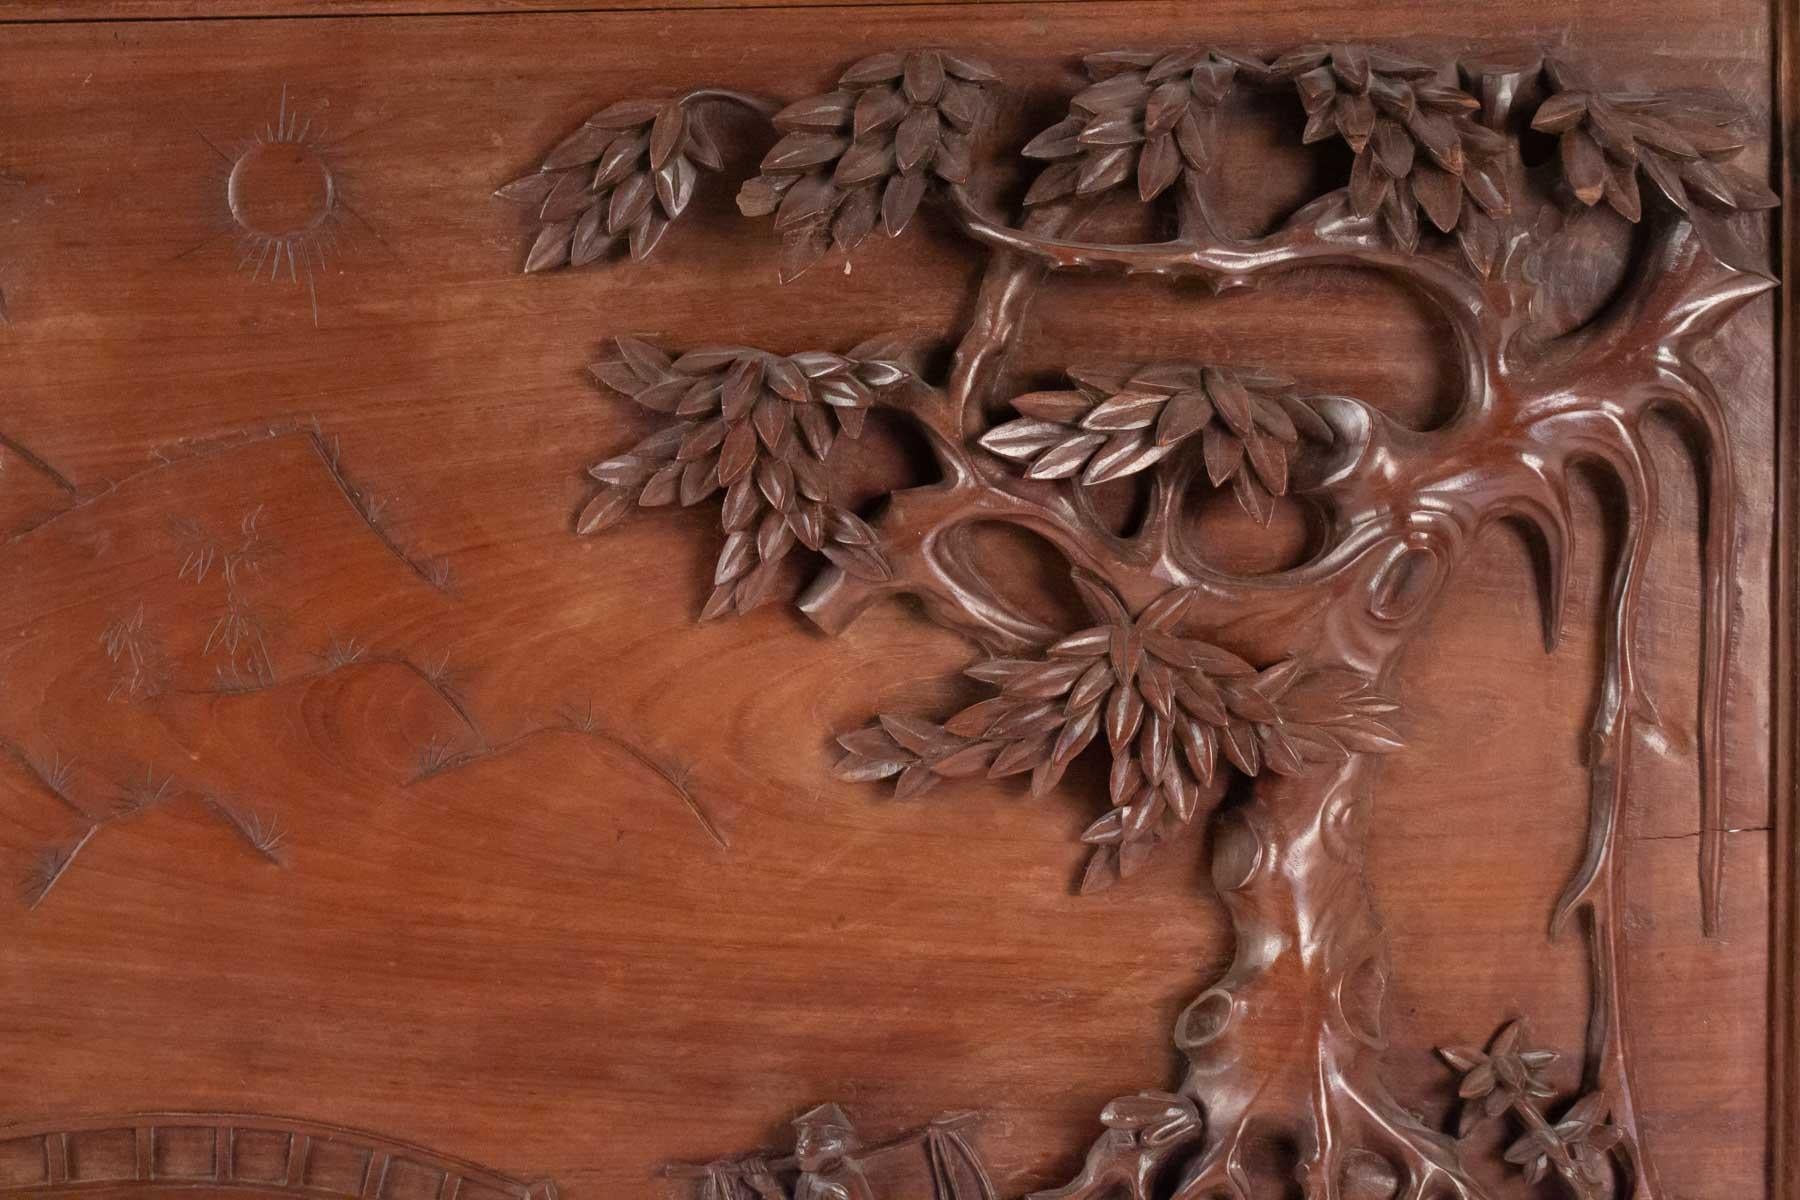 Carved wood panel, China, 20th century, Interior Decoration
Measures: H 48cm, W 66cm, W 3cm.